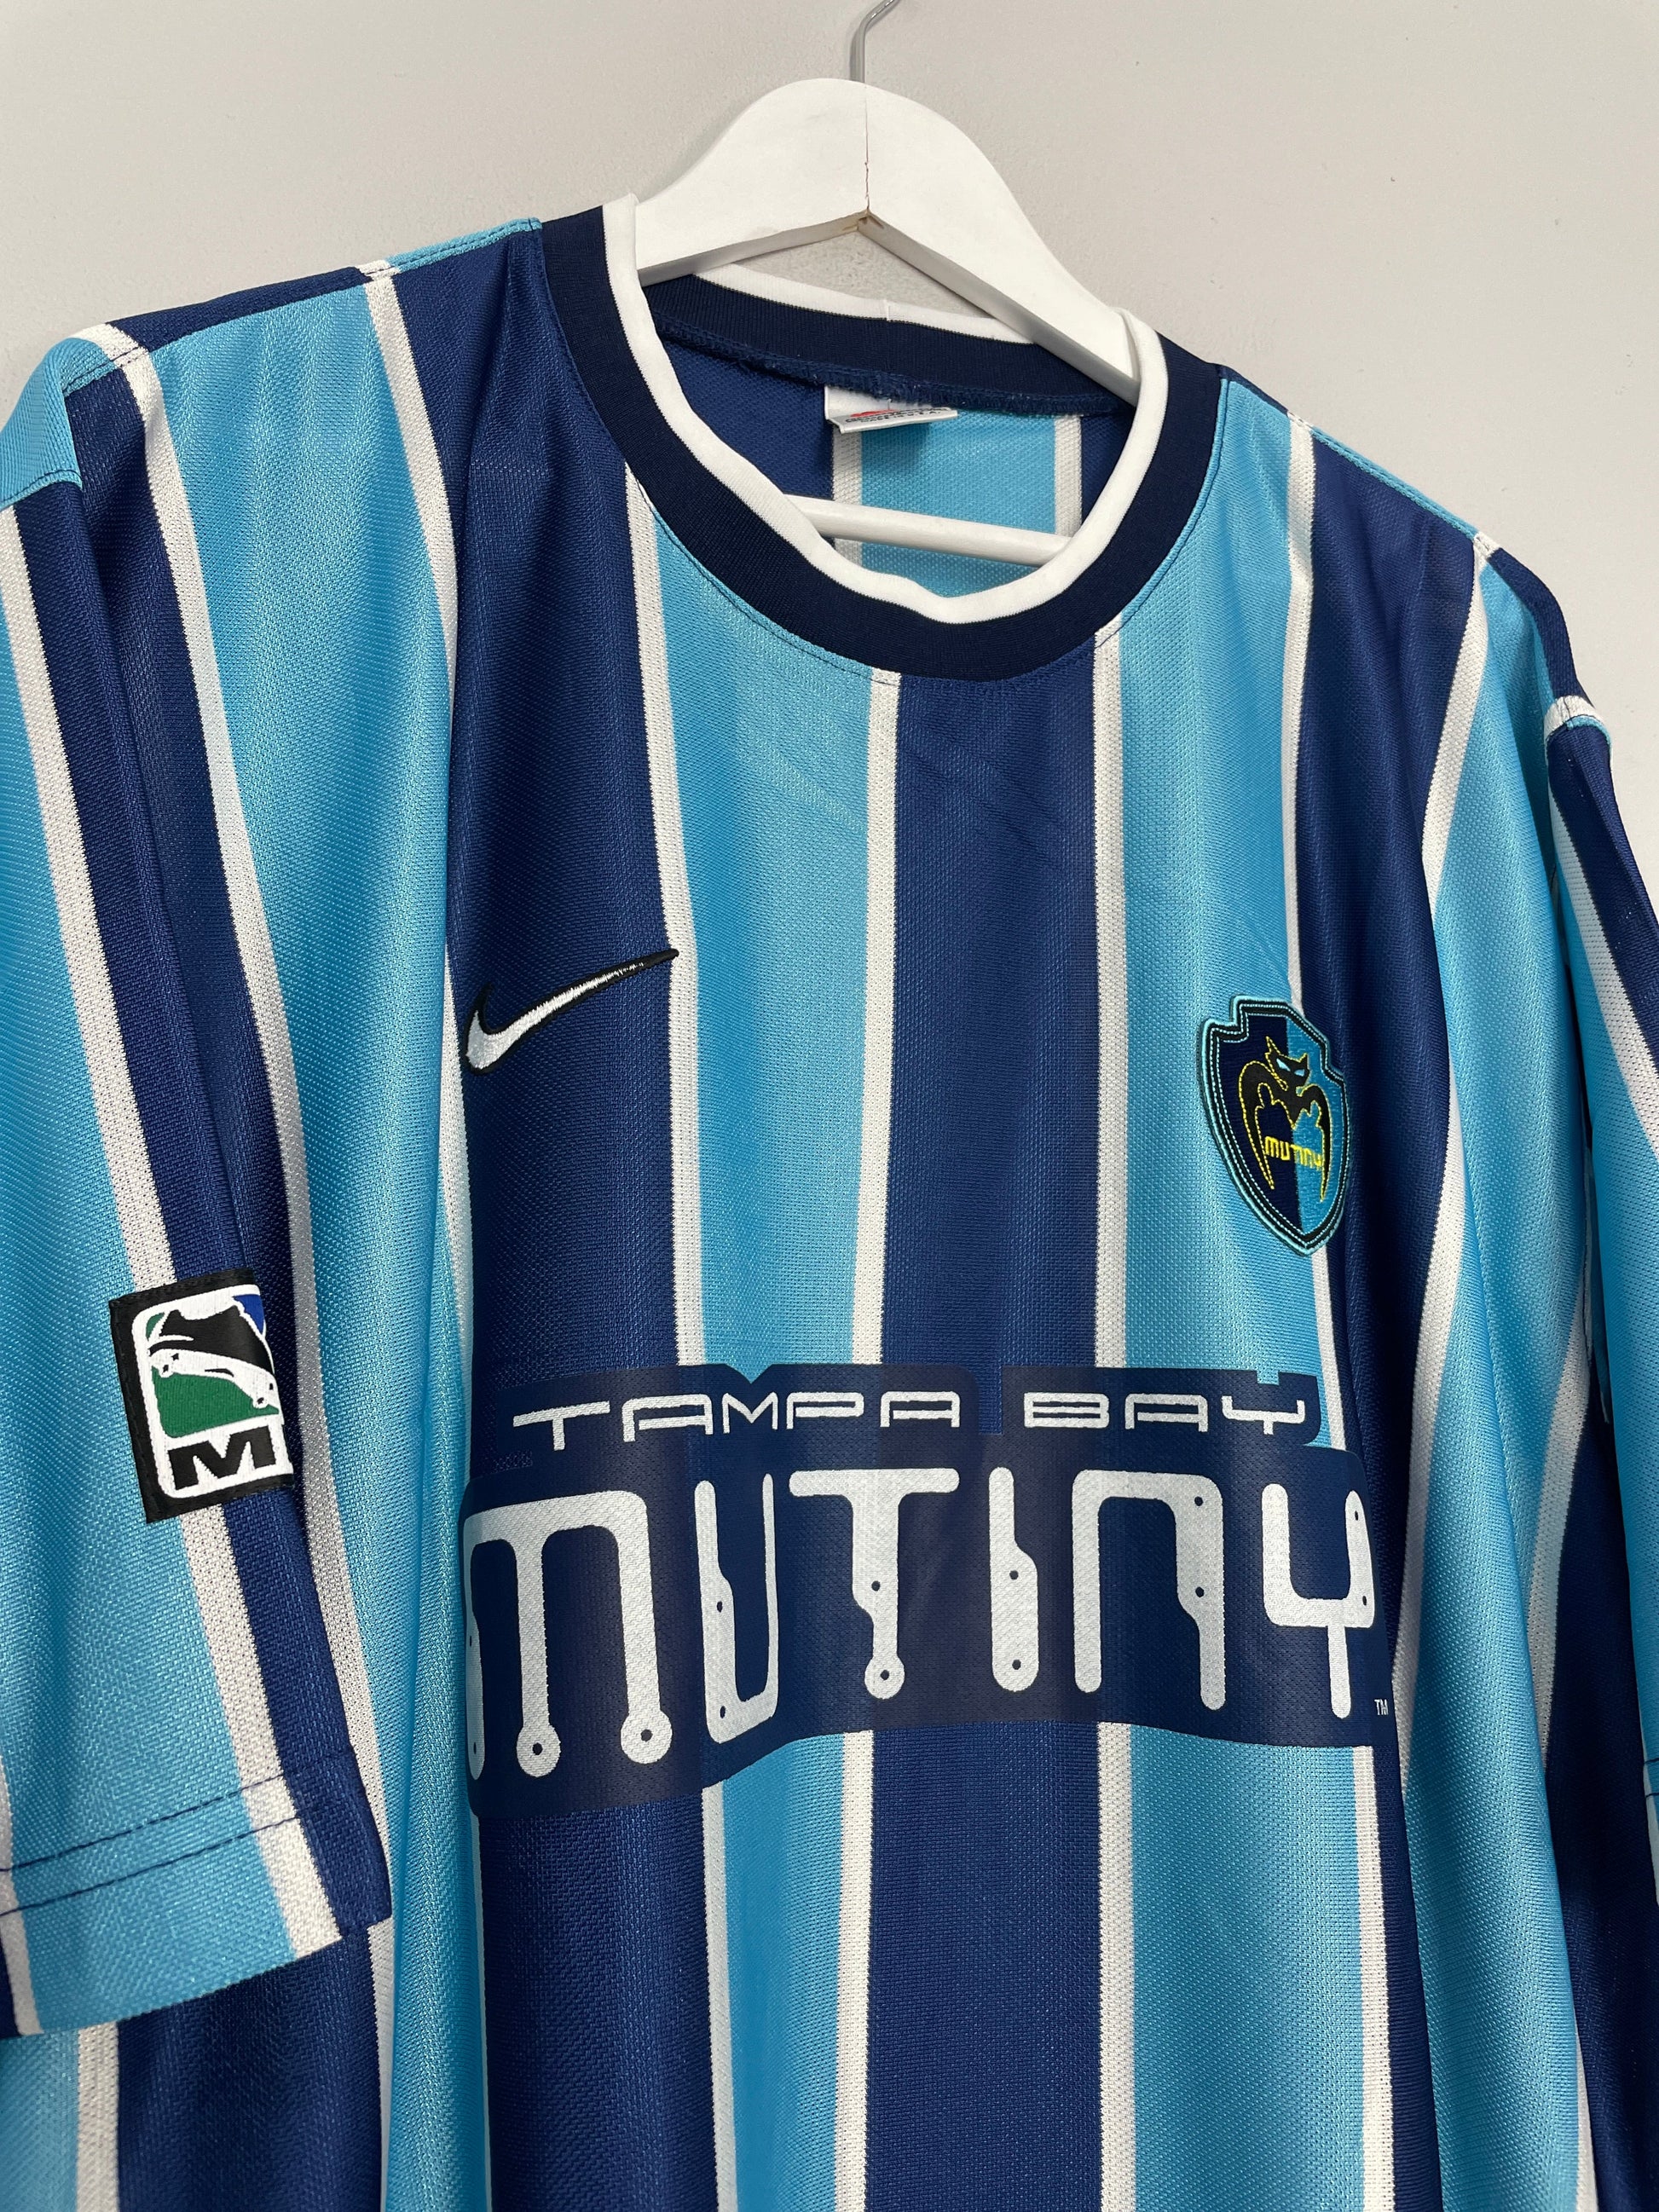 Tampa Bay Mutiny home football shirt 1999/00